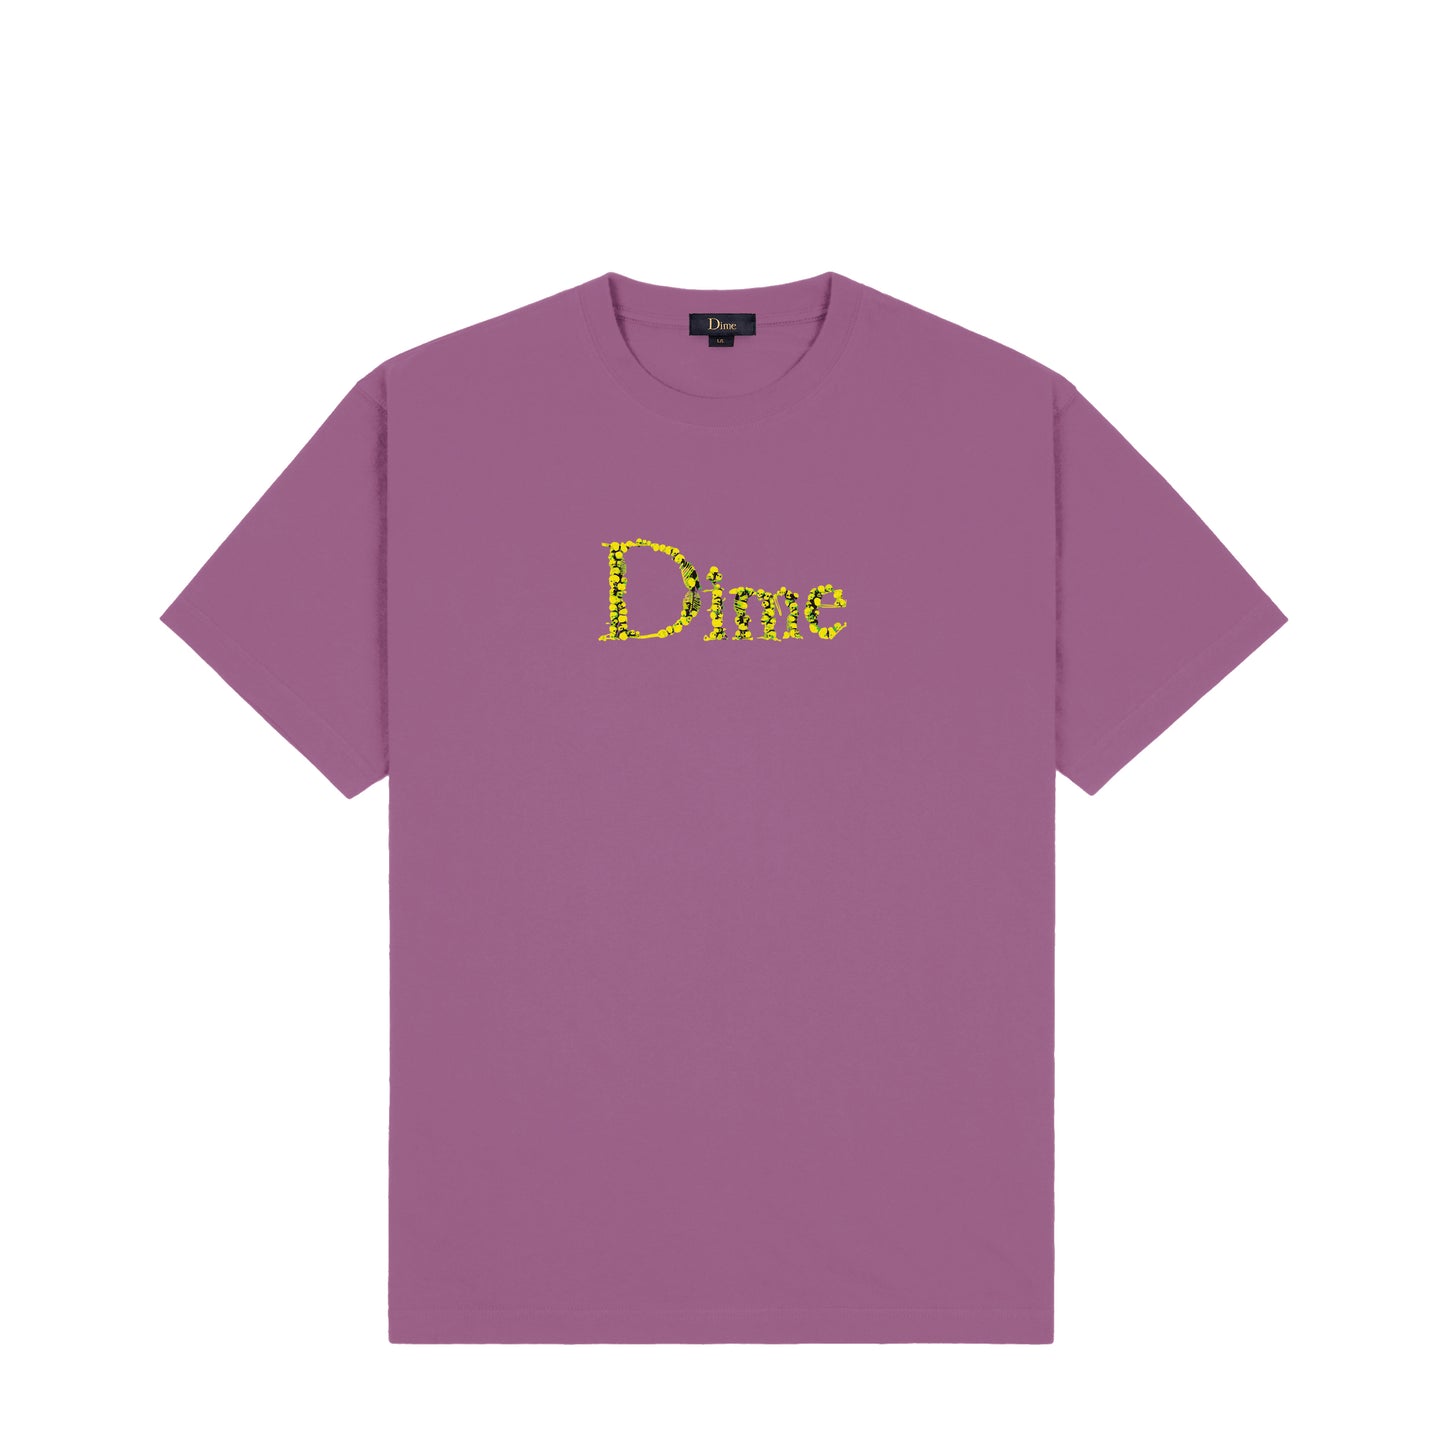 Dime - Classic Skull T-Shirt - Violet